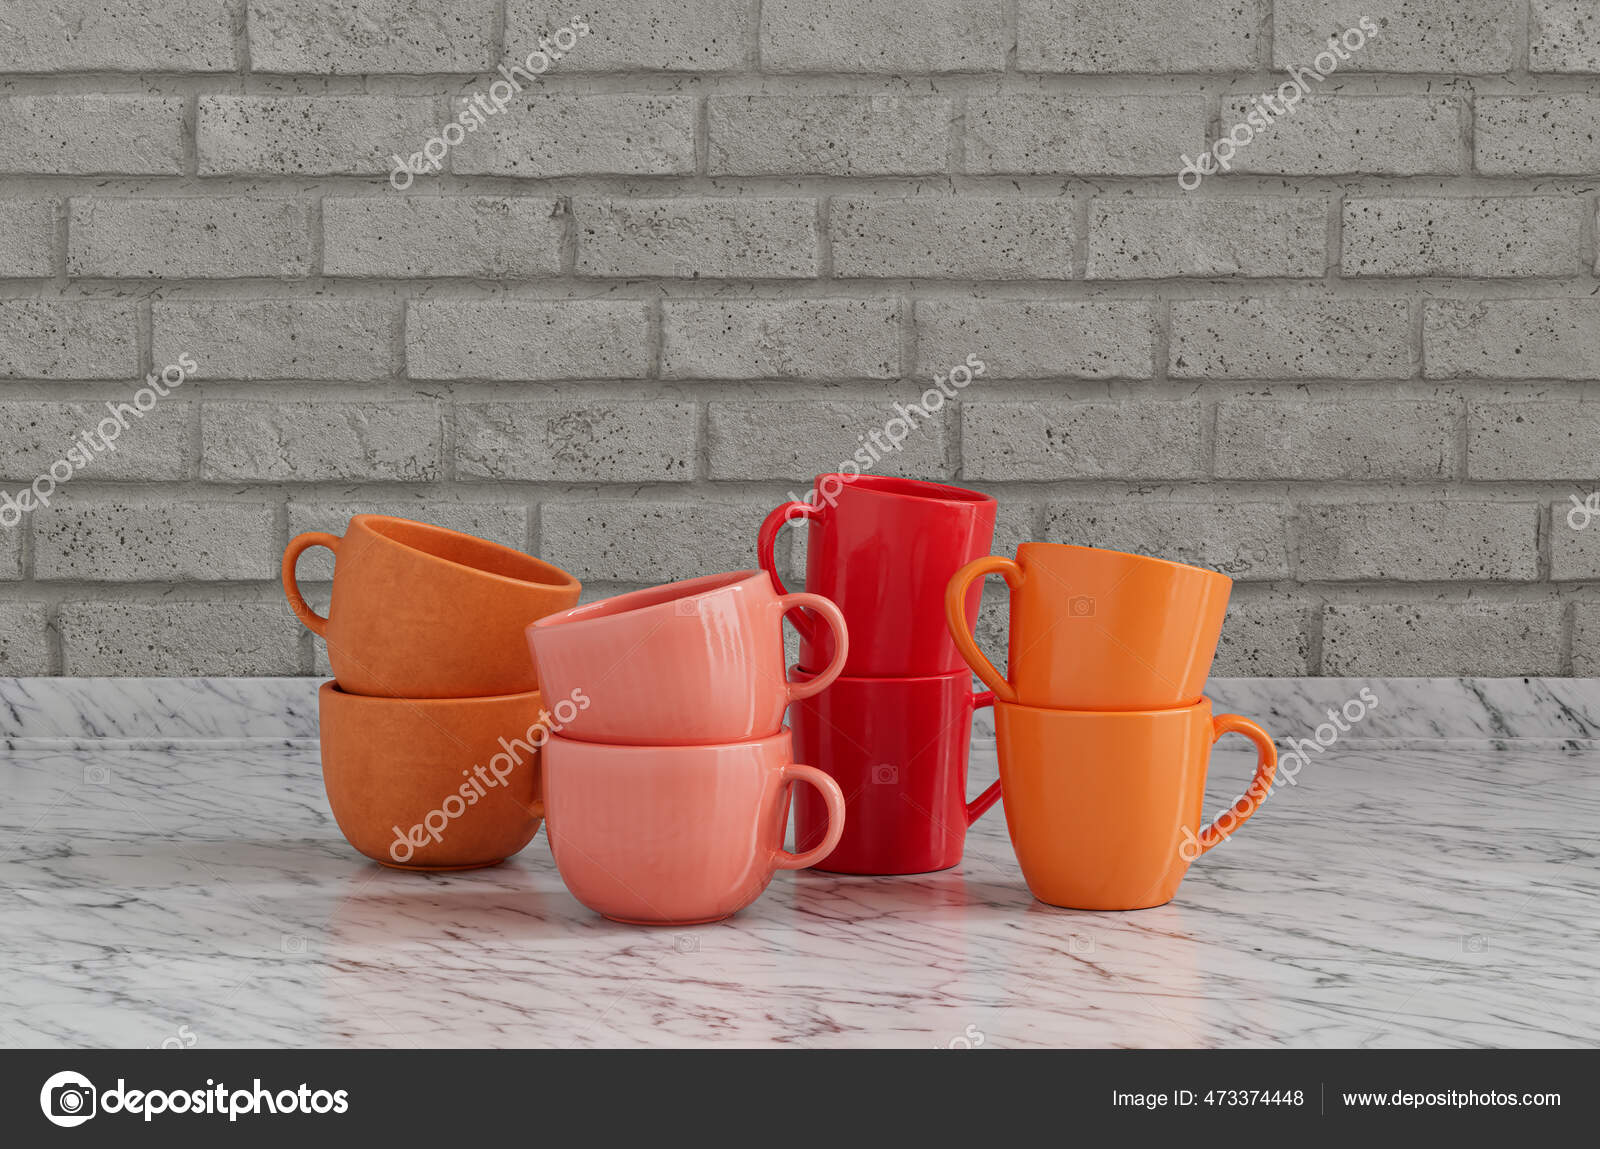 https://st2.depositphotos.com/42774578/47337/i/1600/depositphotos_473374448-stock-photo-red-orange-coffee-mugs-stacked.jpg